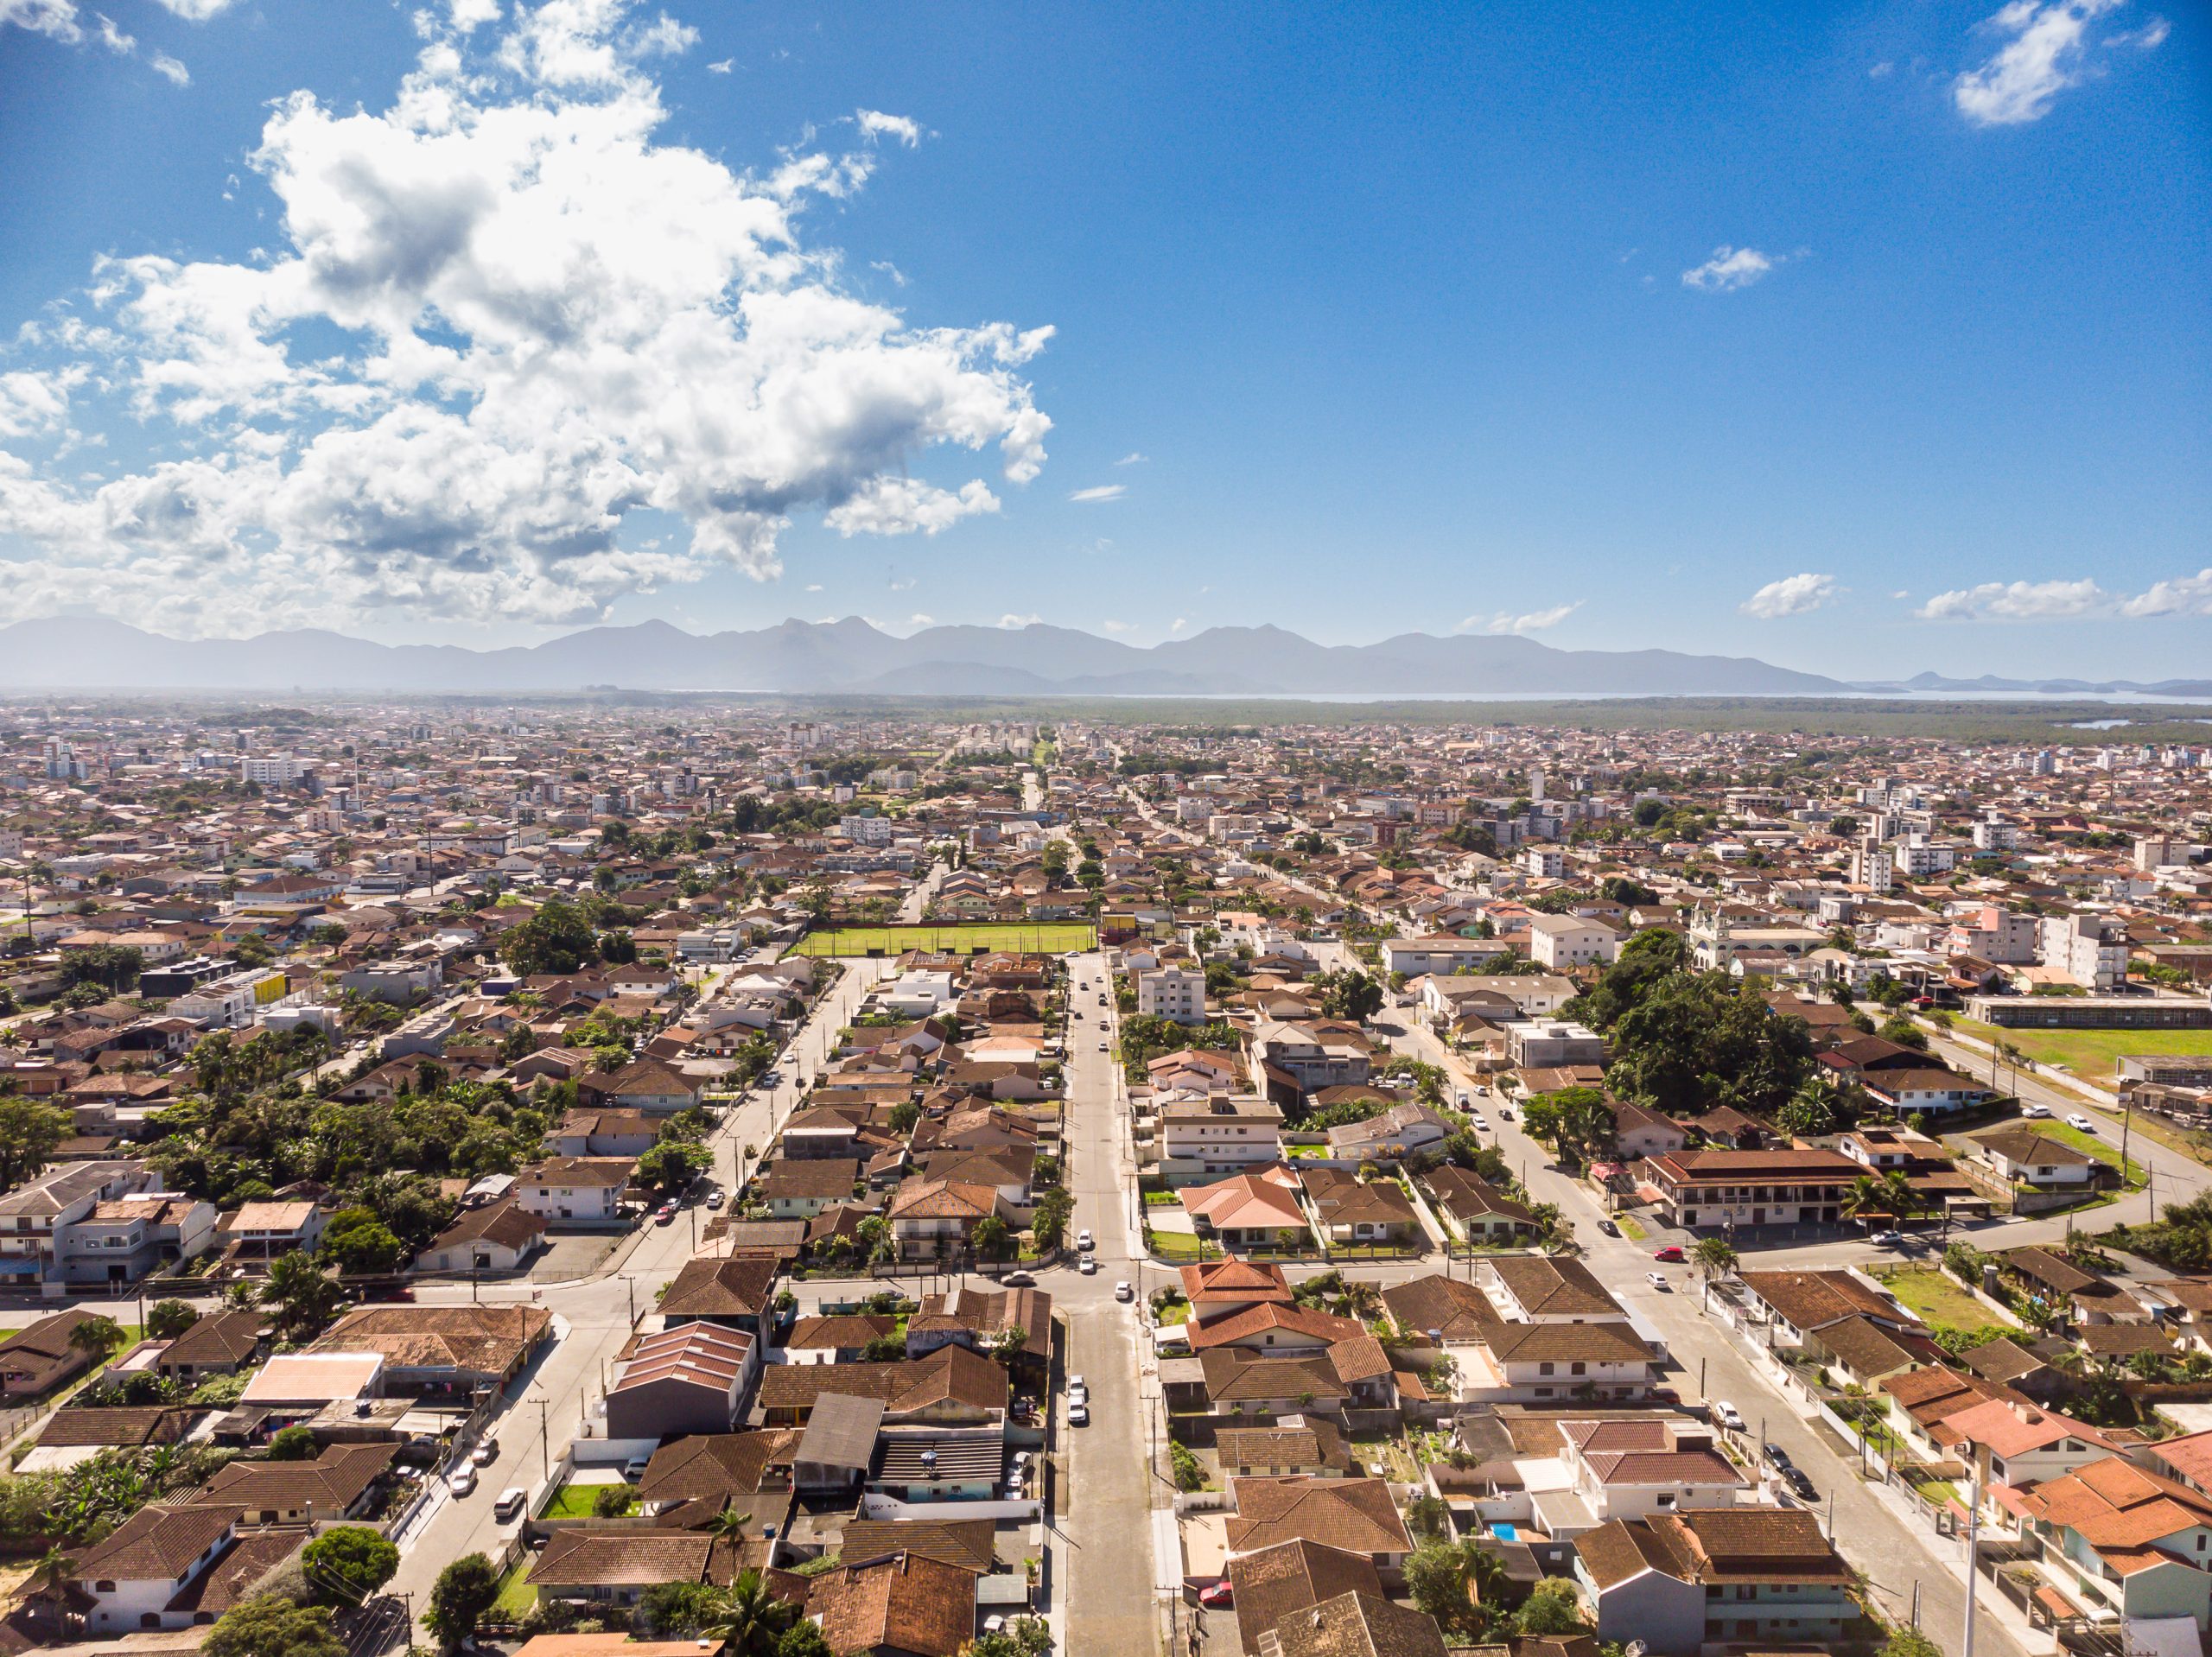 Vista aérea do bairro Iririú / Foto: Mauro Arthur Schlieck